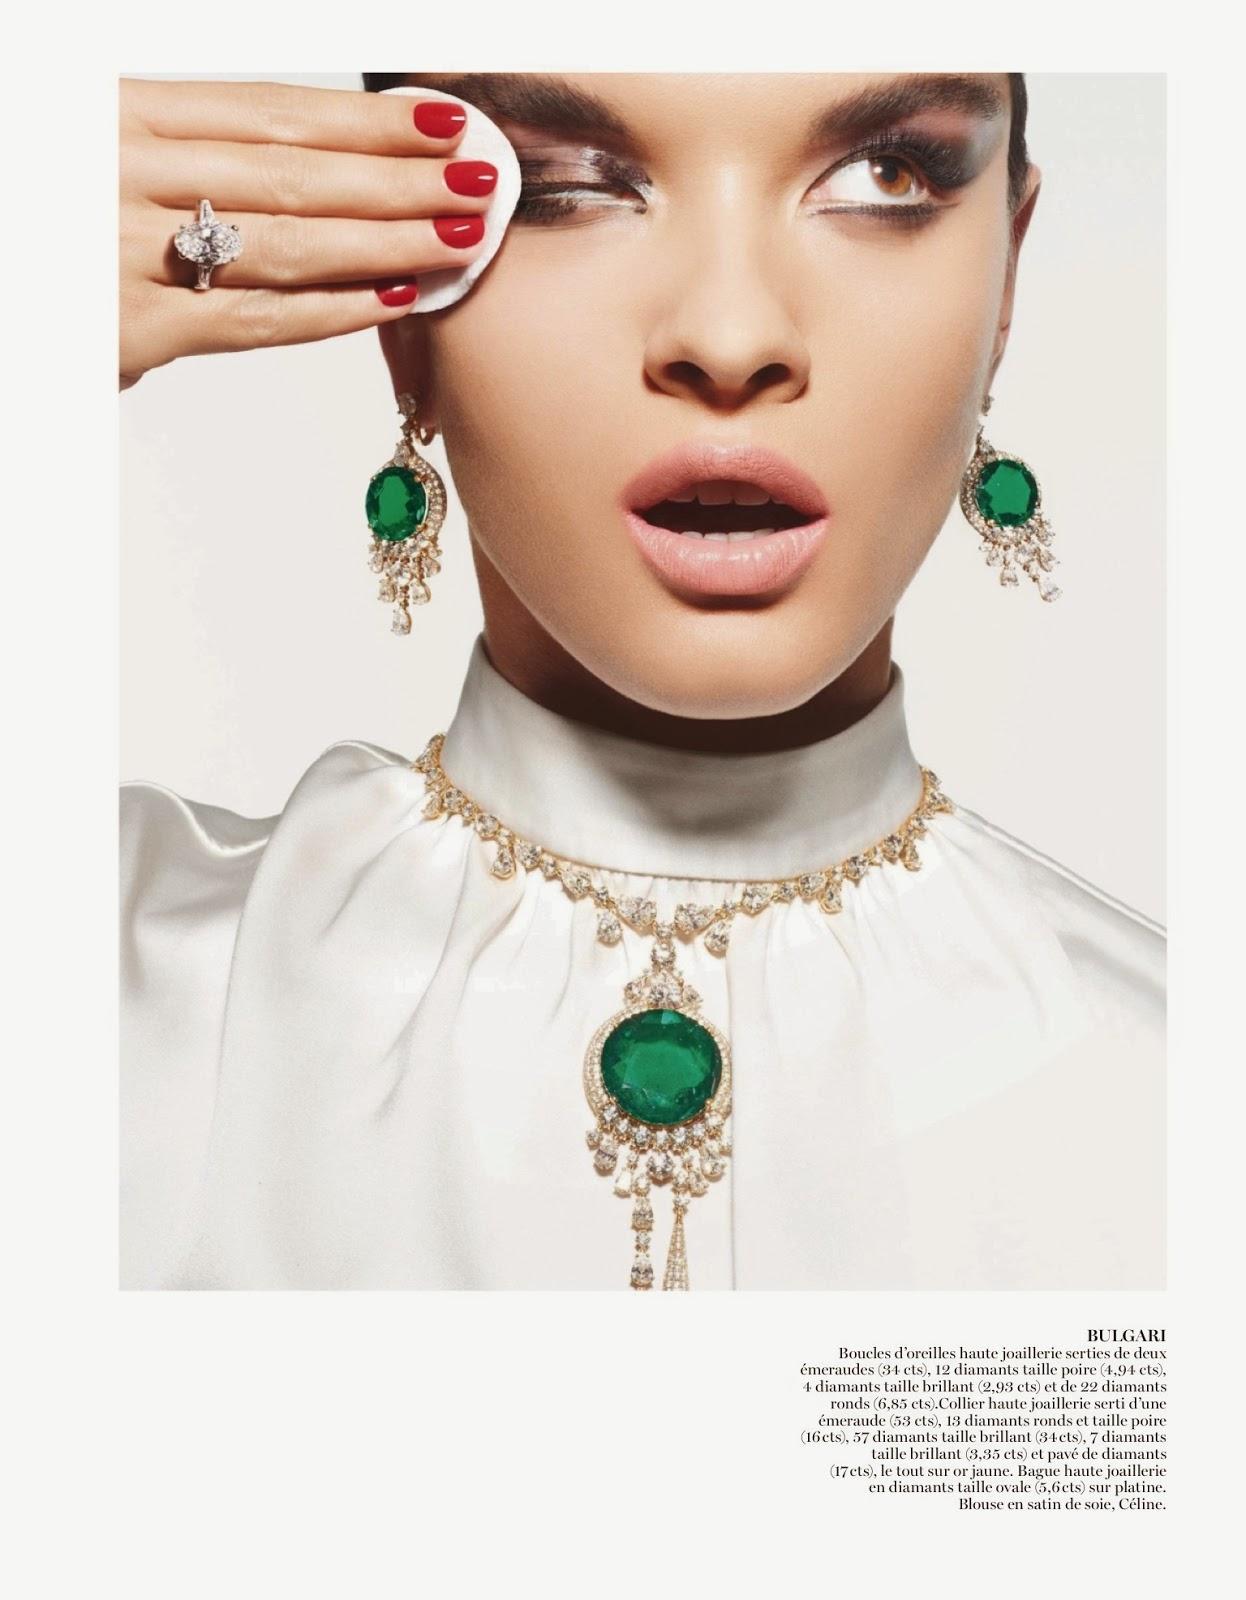 Crystal Renn by Thomas Lagrange for Vogue Paris October 2013